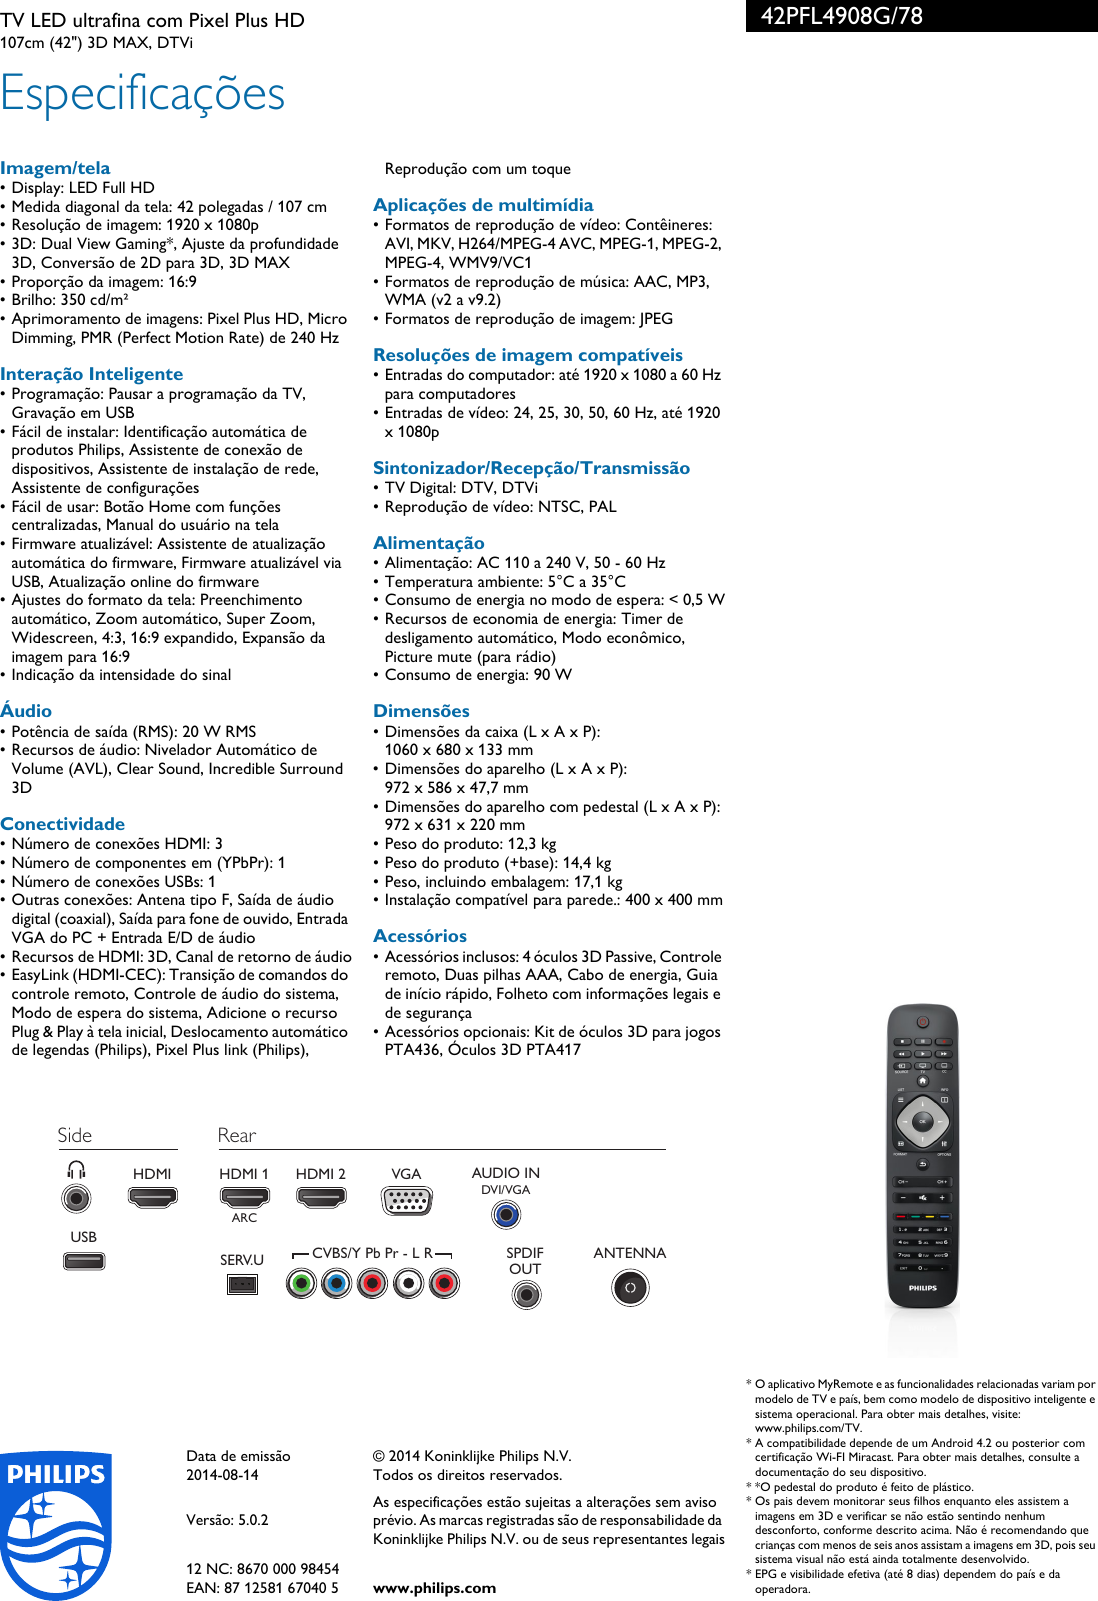 Page 3 of 3 - Philips 42PFL4908G/78 TV LED Ultrafina Com Pixel Plus HD User Manual Folheto 42pfl4908g 78 Pss Brpbr